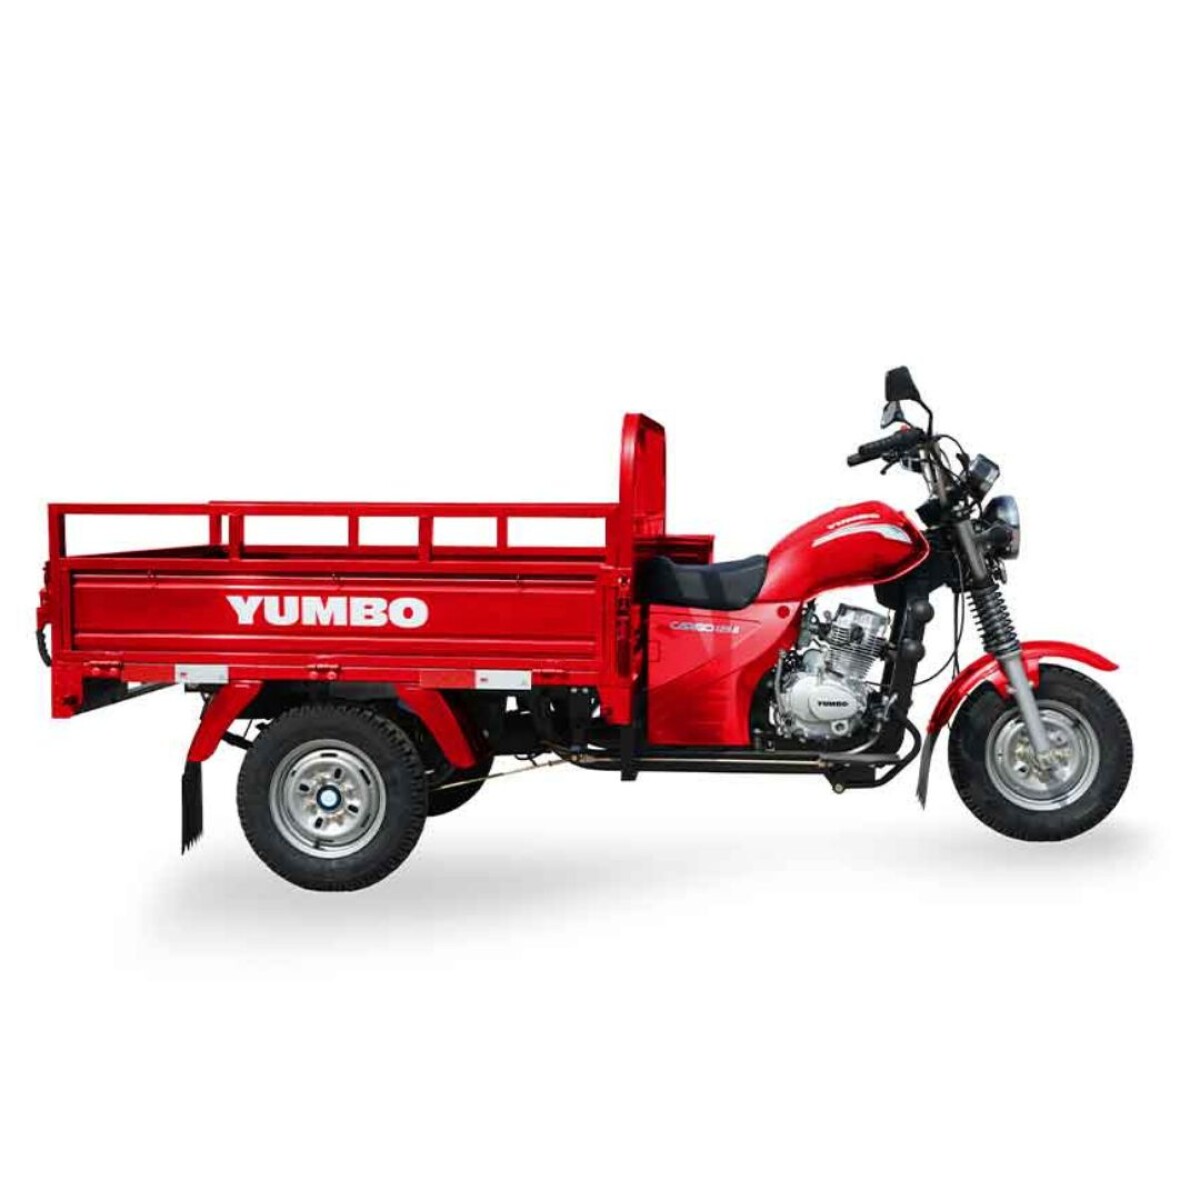 Yumbo Cargo 125II - Reserva 